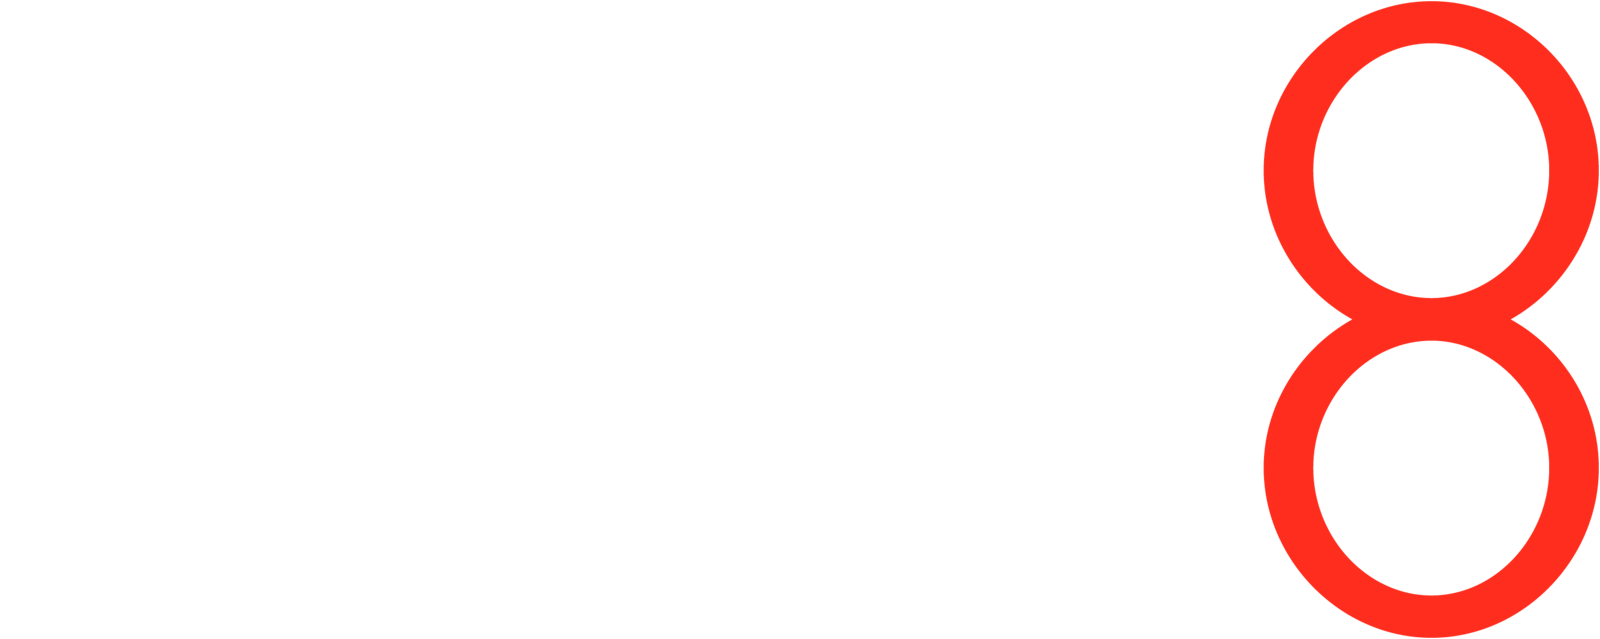 ept Logo Zero8.png